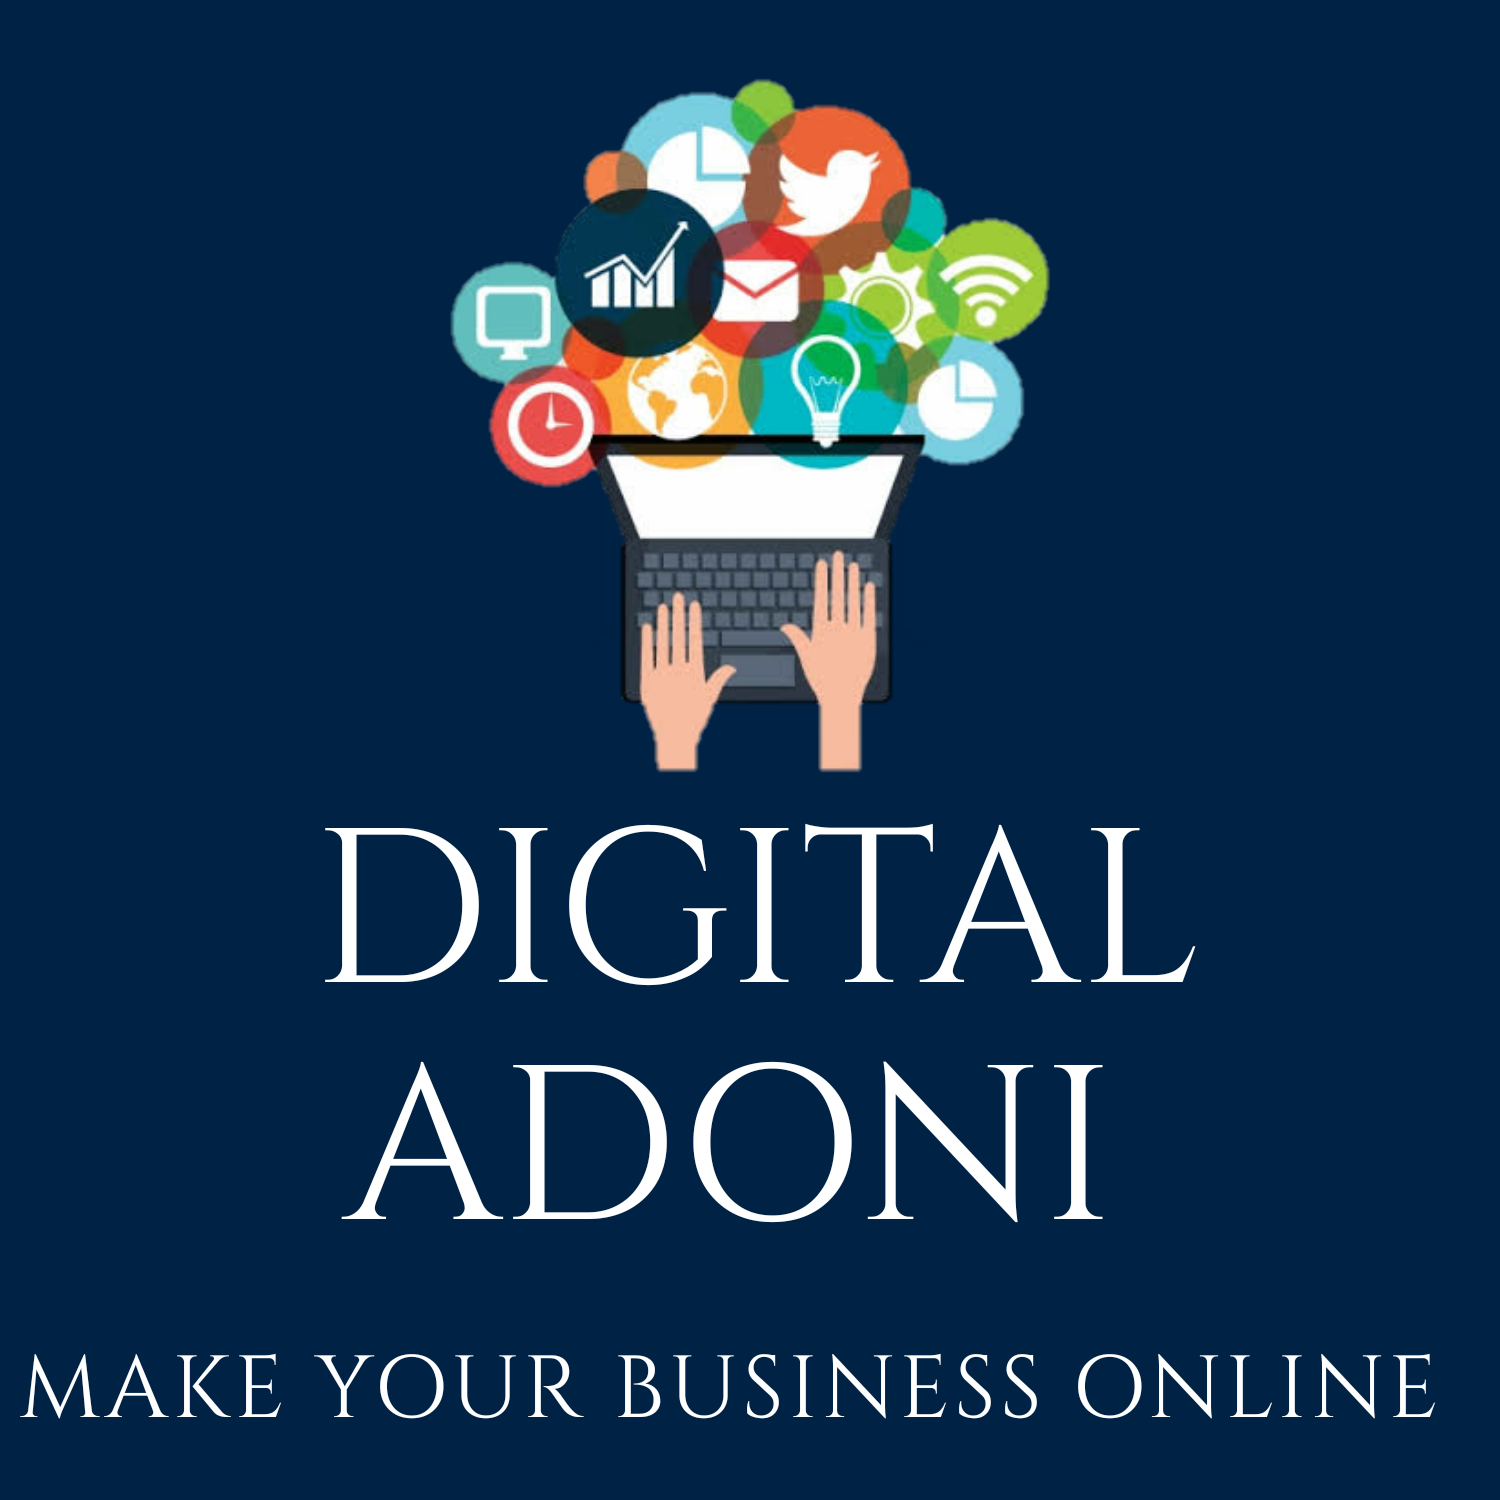 Digital Adoni